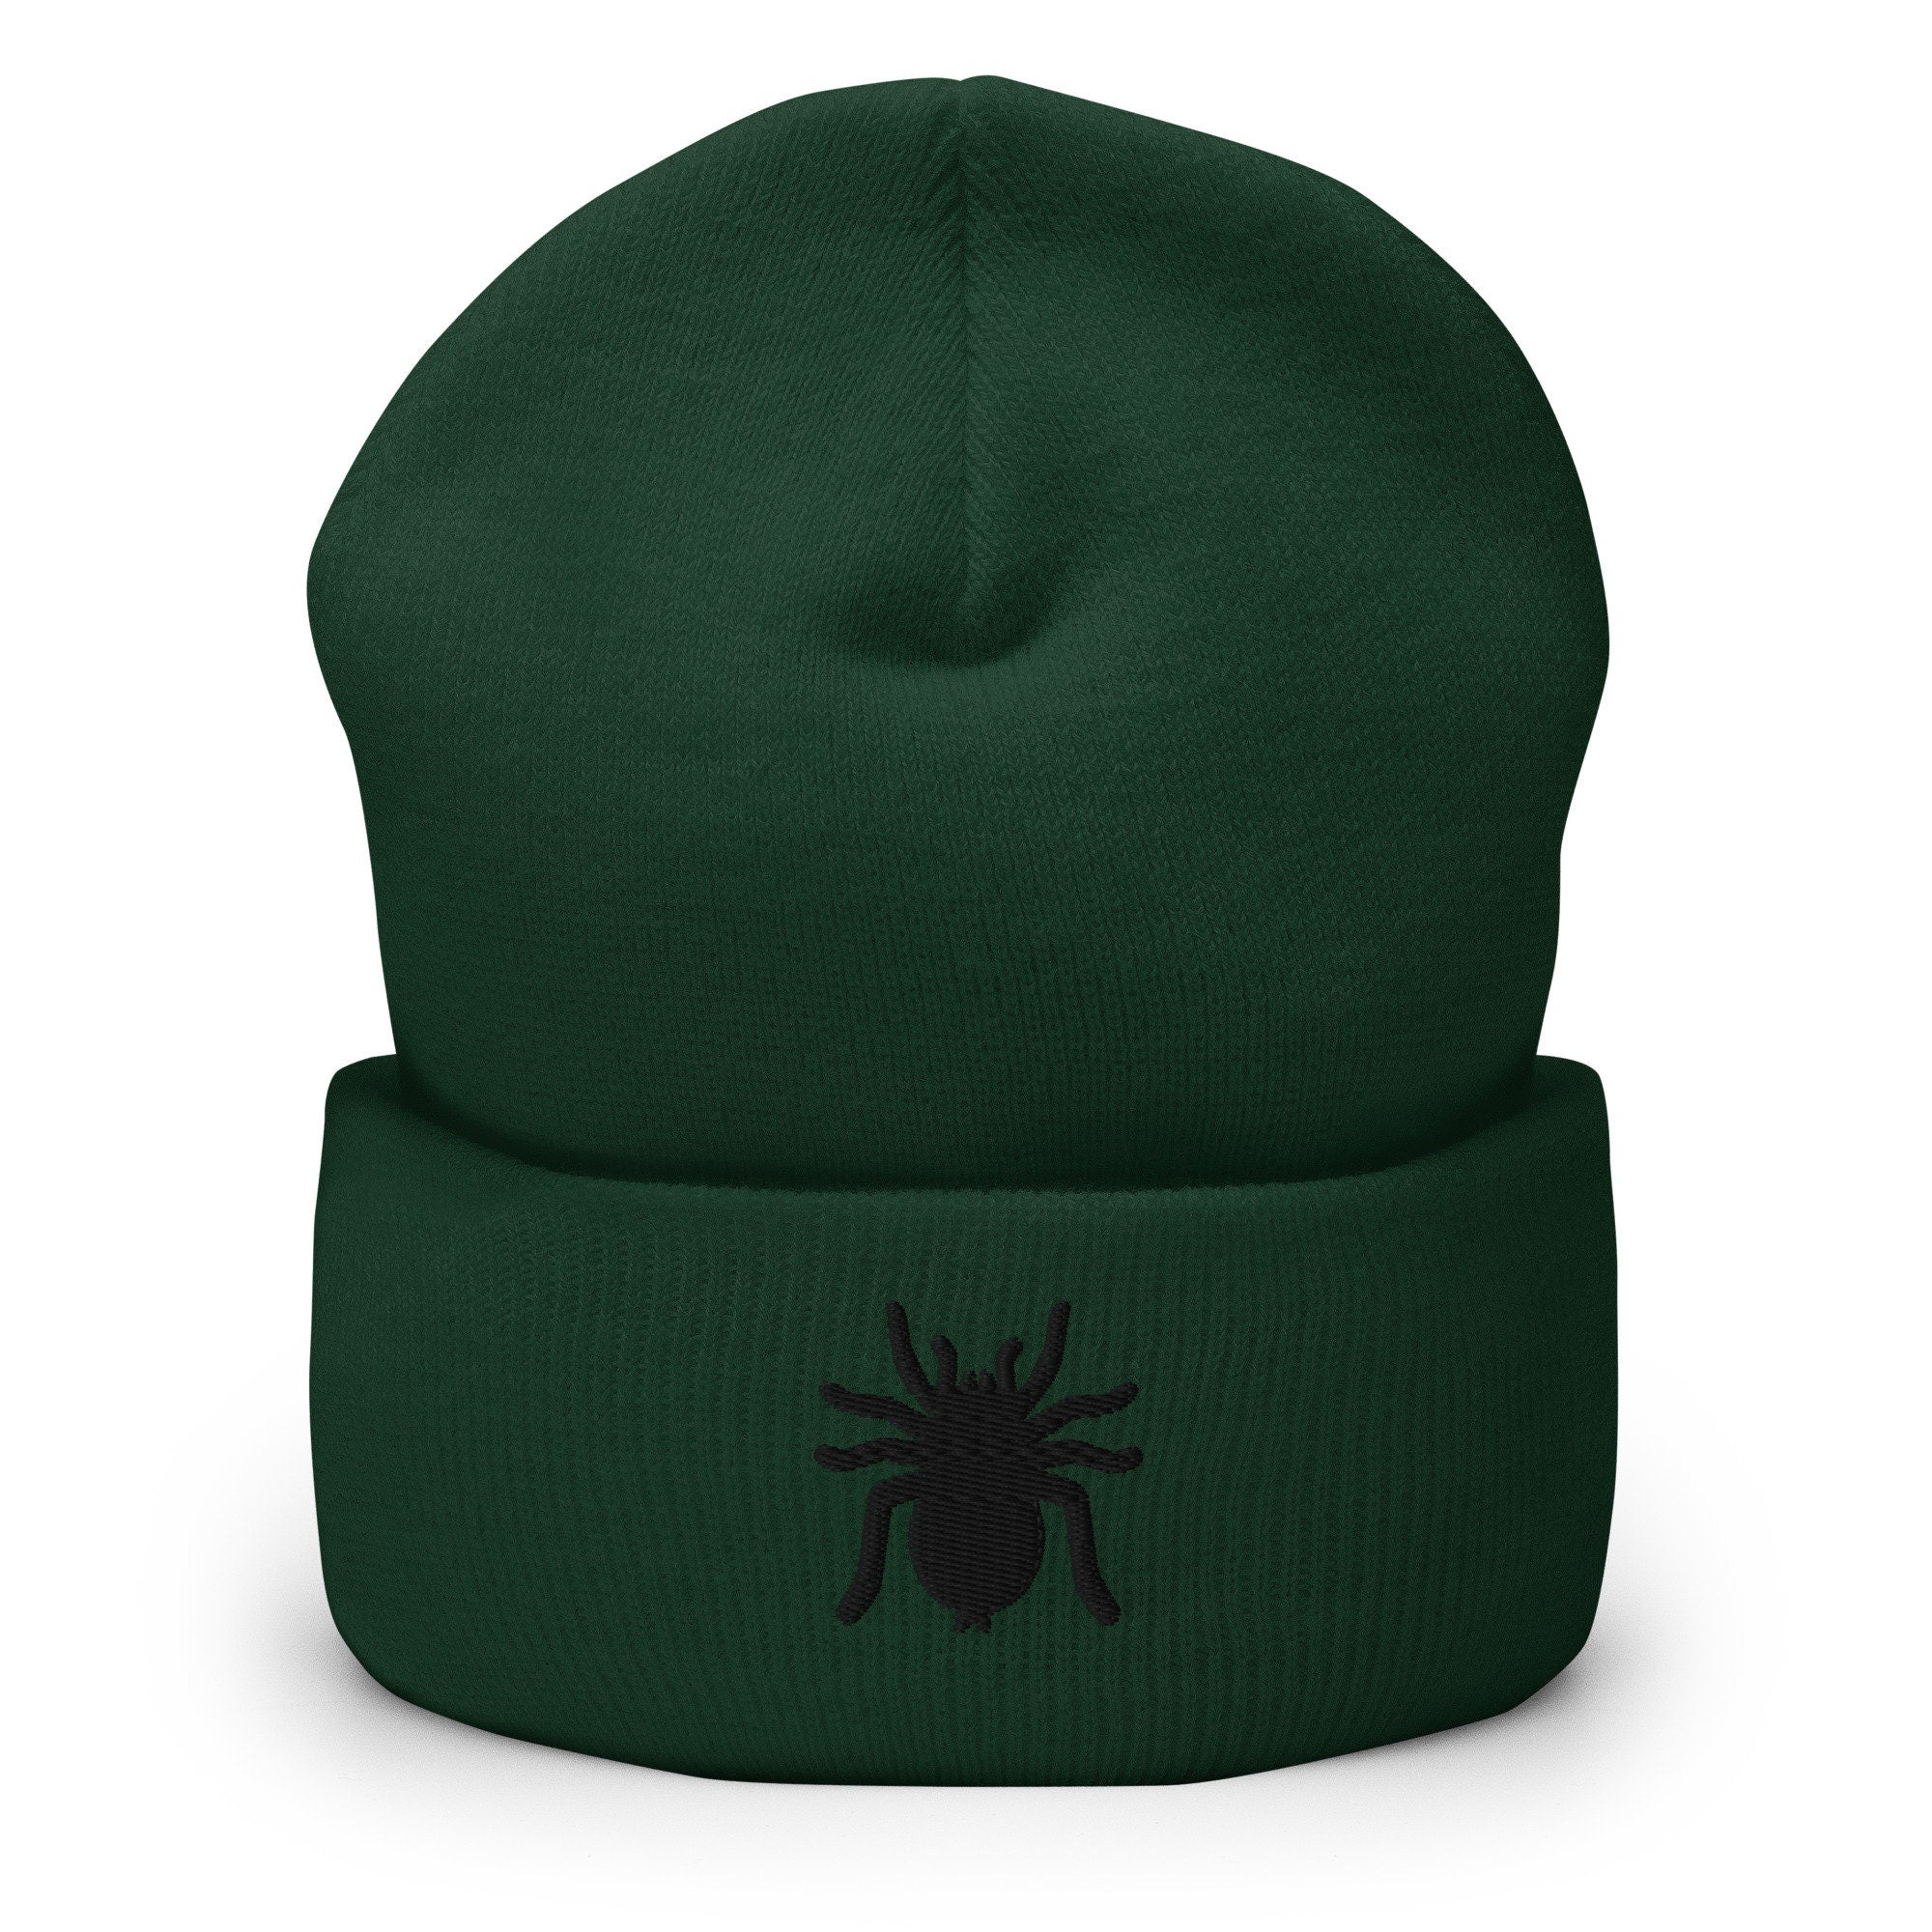 Tarantula Arachnid Embroidered Beanie, Handmade Cuffed Knit Unisex Slouchy Adult Winter Hat Cap Gift